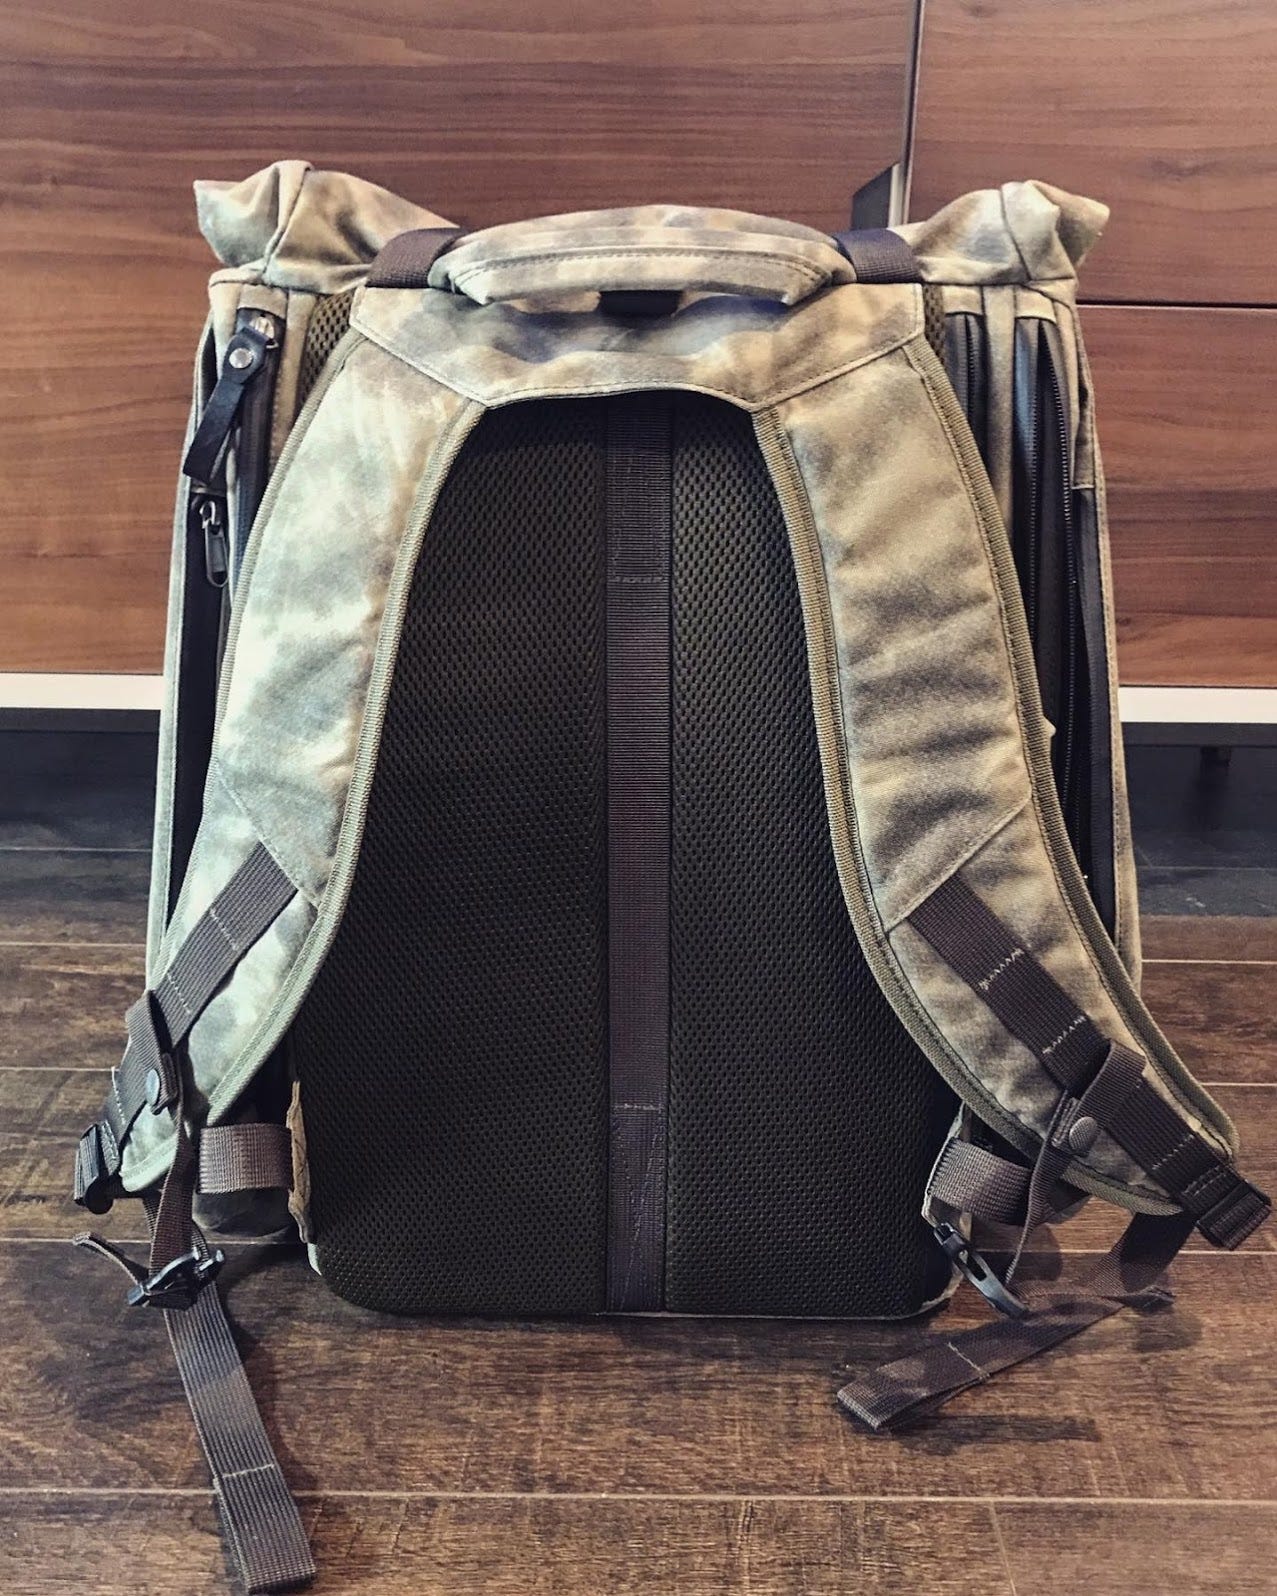 Wotancraft New Pilot backpack review: A high-quality, modular bag